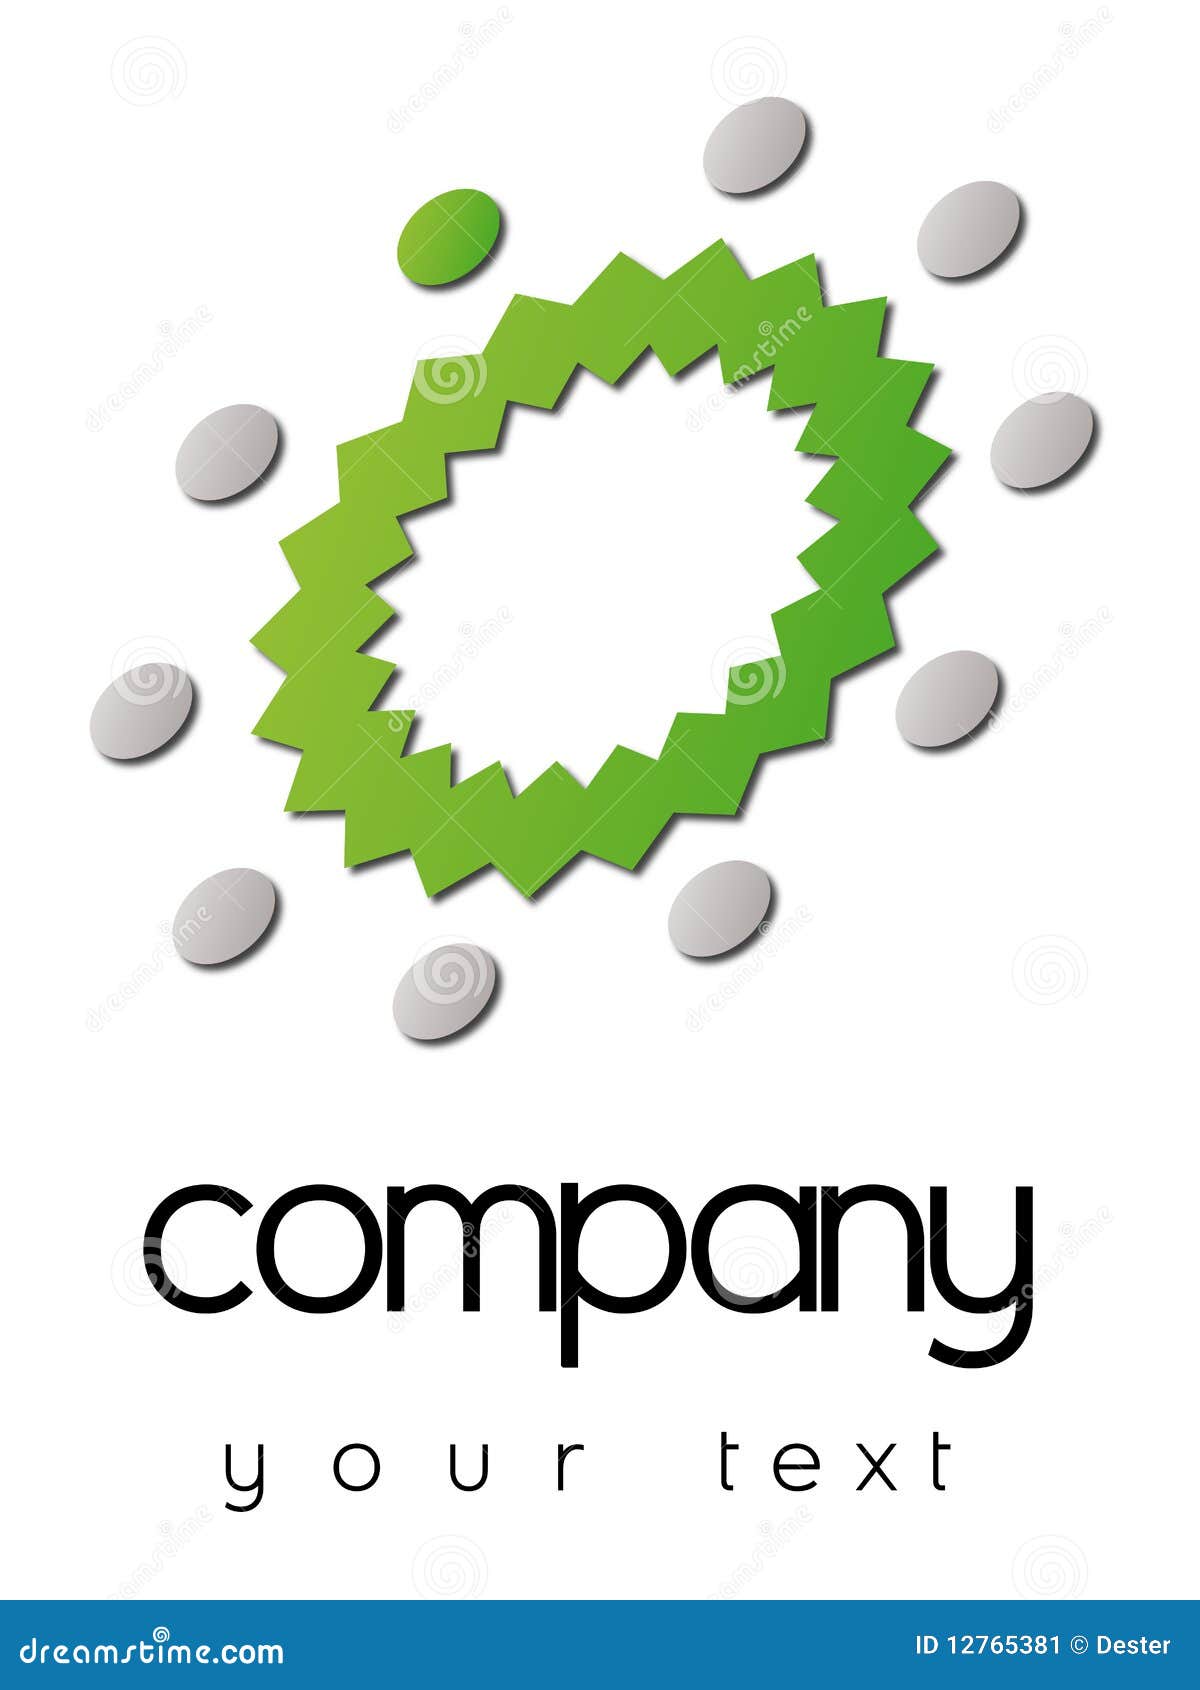 Business logo stock illustration. Illustration of registered - 12765381